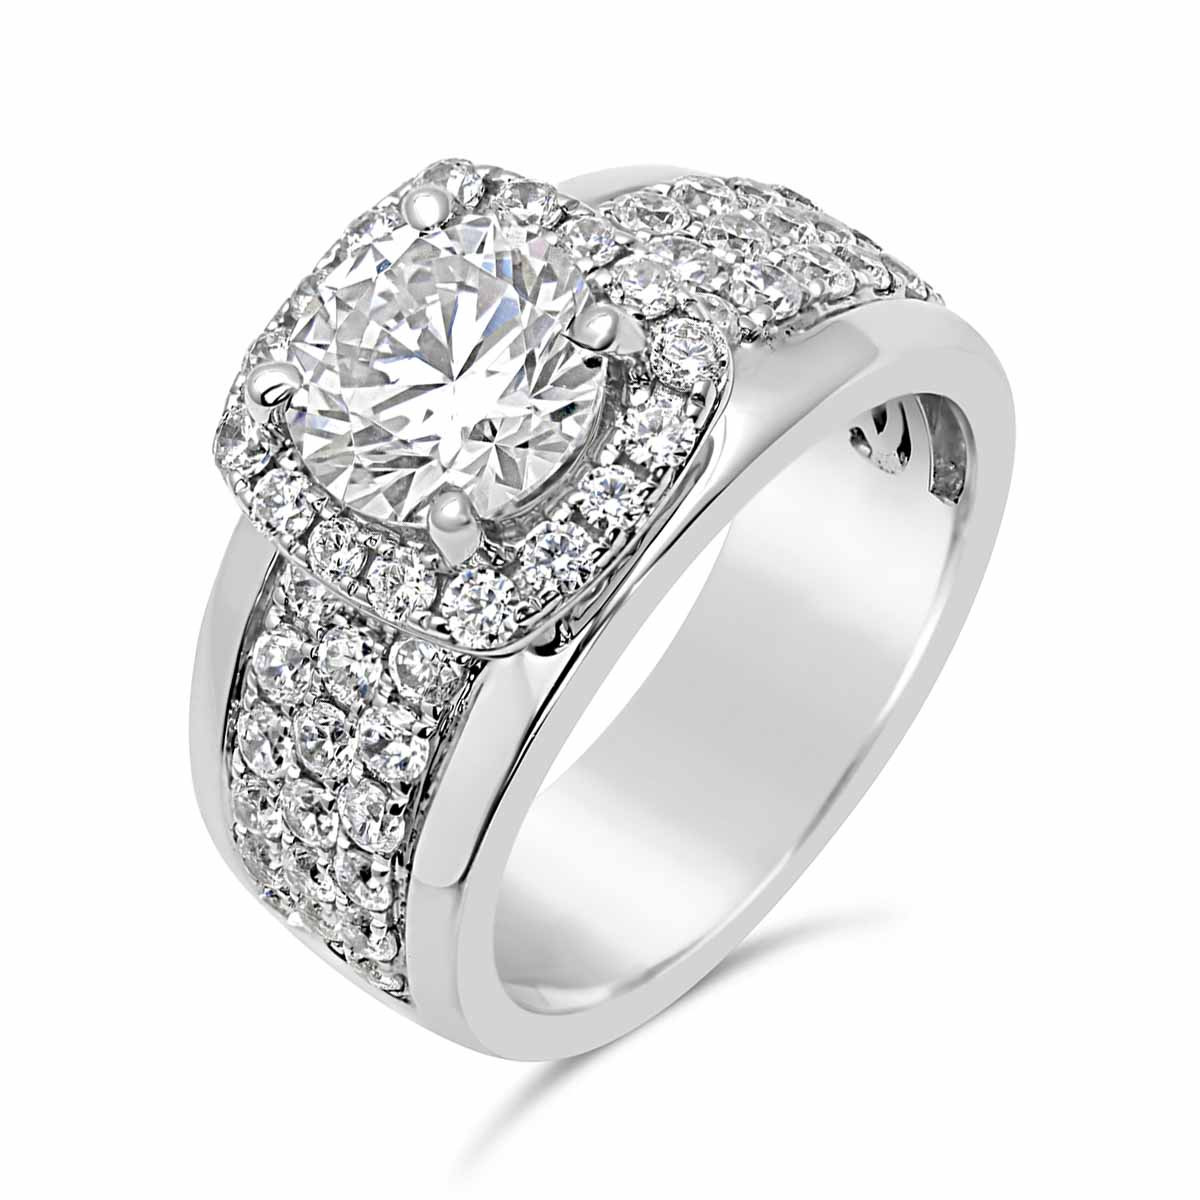 Wide Band Rings With Diamonds
 Diamond Halo Engagement Ring With Wide Band The Diamond